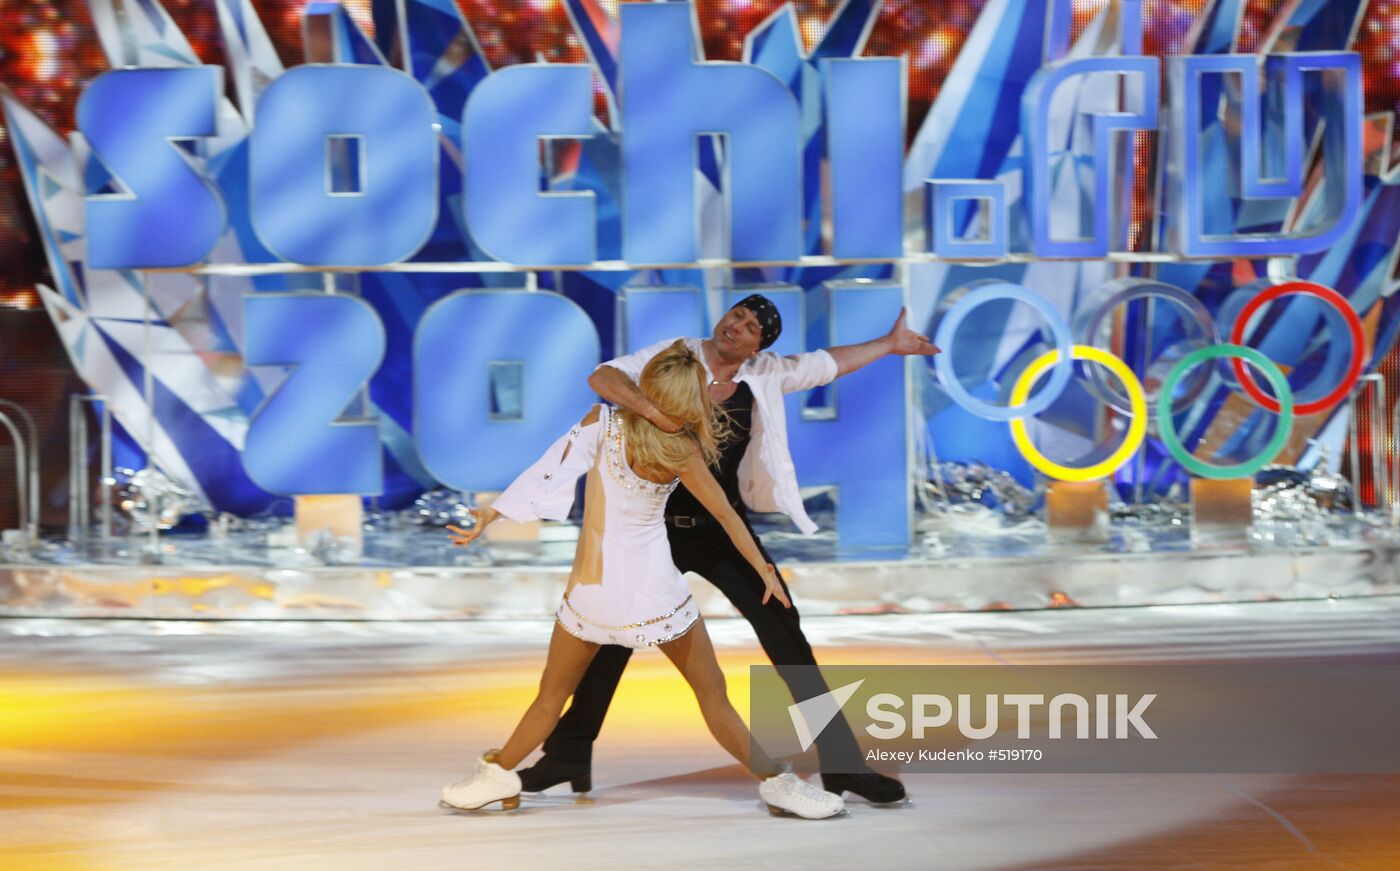 Ice skaters Tatyana Navka and Roman Kostomarov